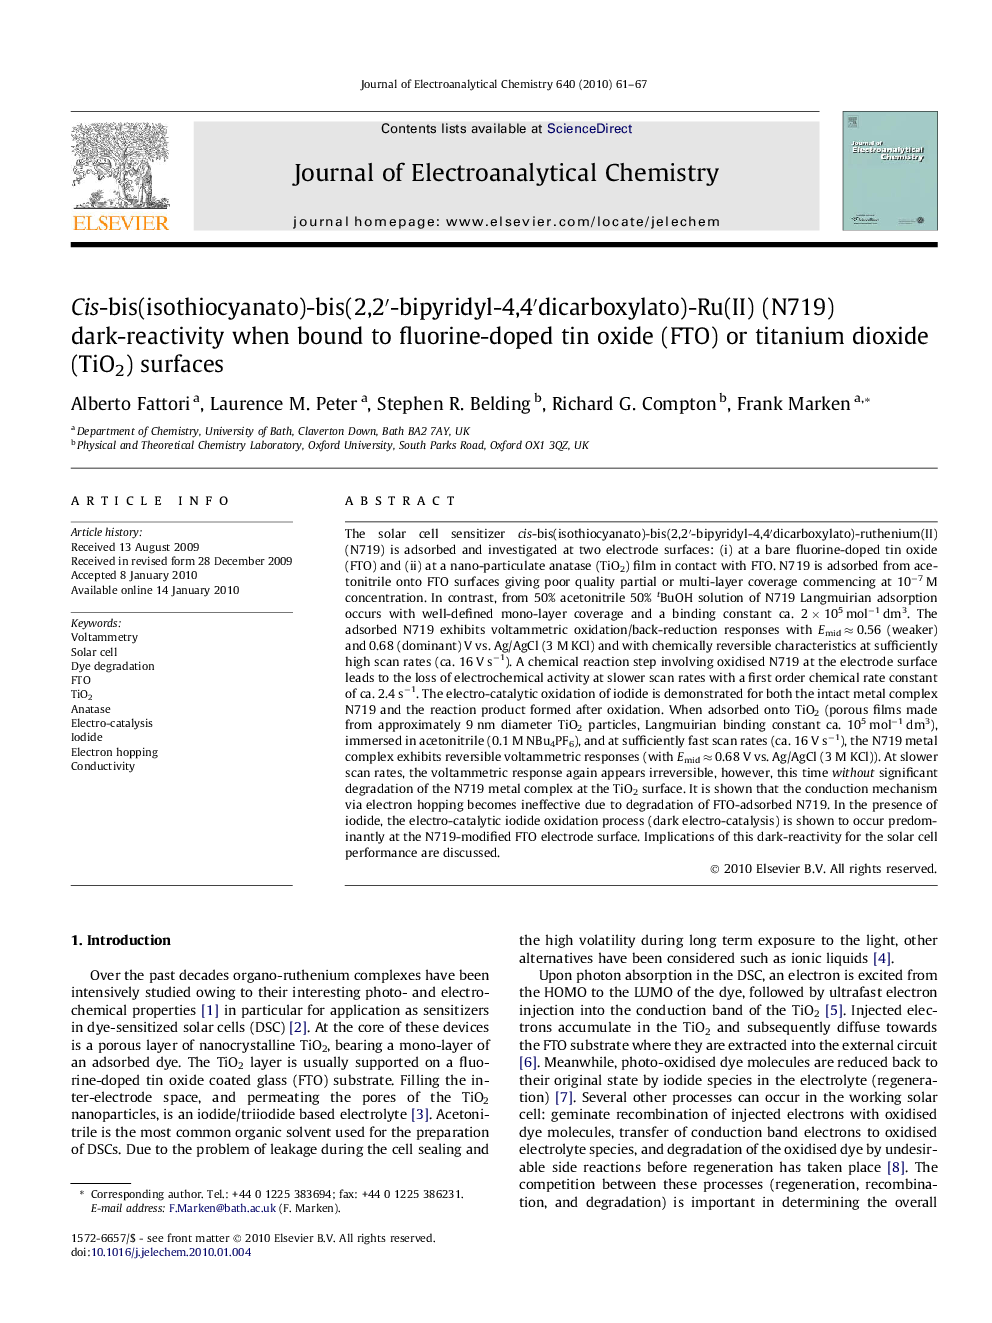 Cis-bis(isothiocyanato)-bis(2,2′-bipyridyl-4,4′dicarboxylato)-Ru(II) (N719) dark-reactivity when bound to fluorine-doped tin oxide (FTO) or titanium dioxide (TiO2) surfaces